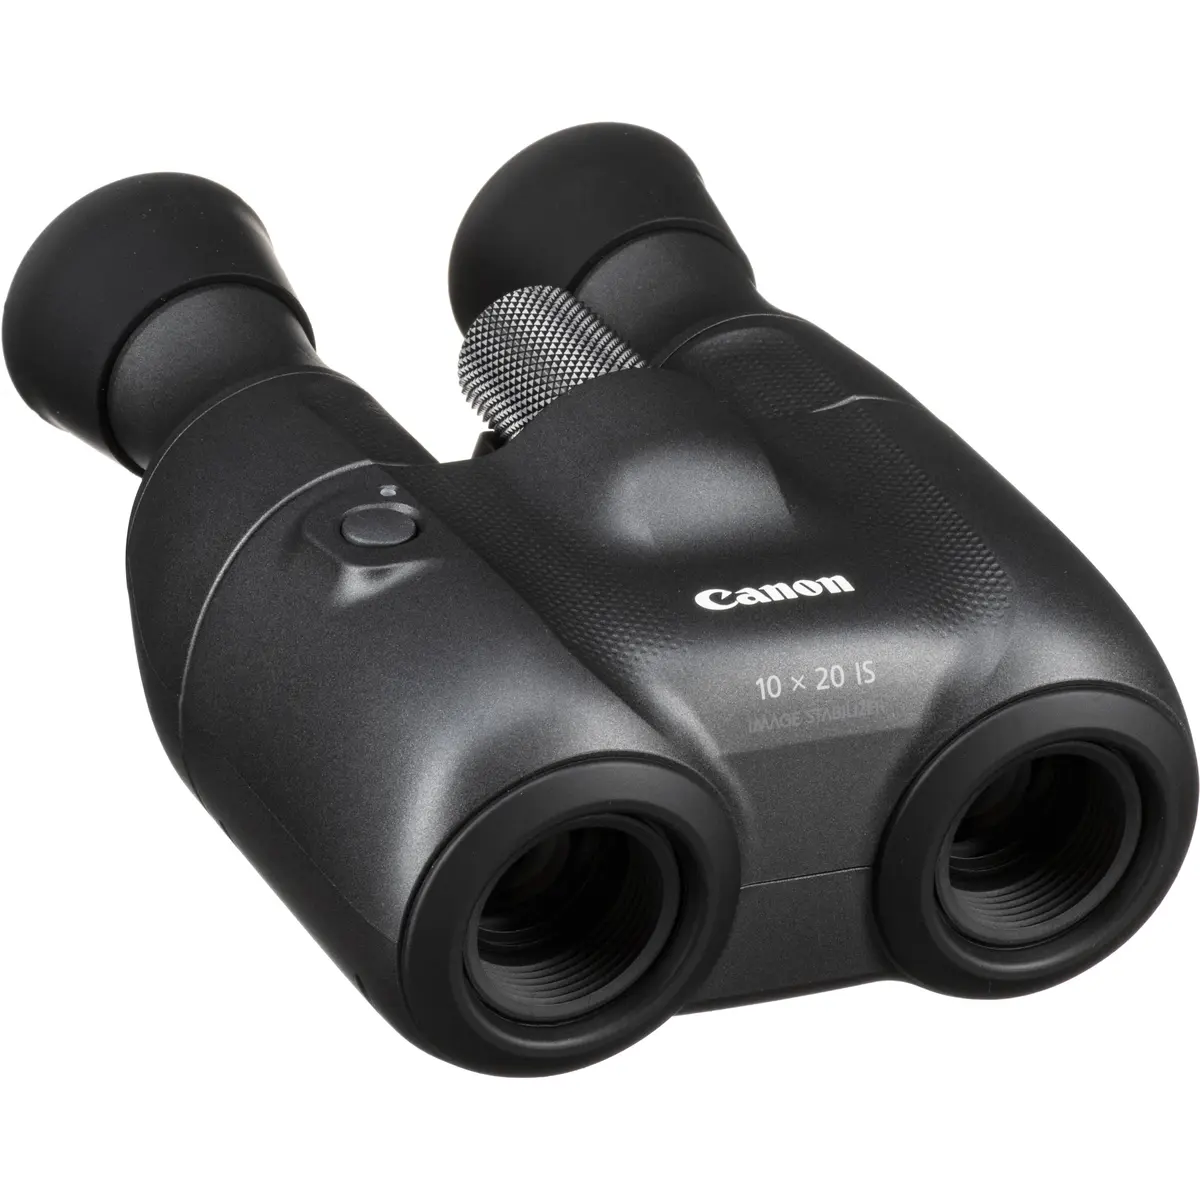 Canon 10 x 20 IS Binoculars